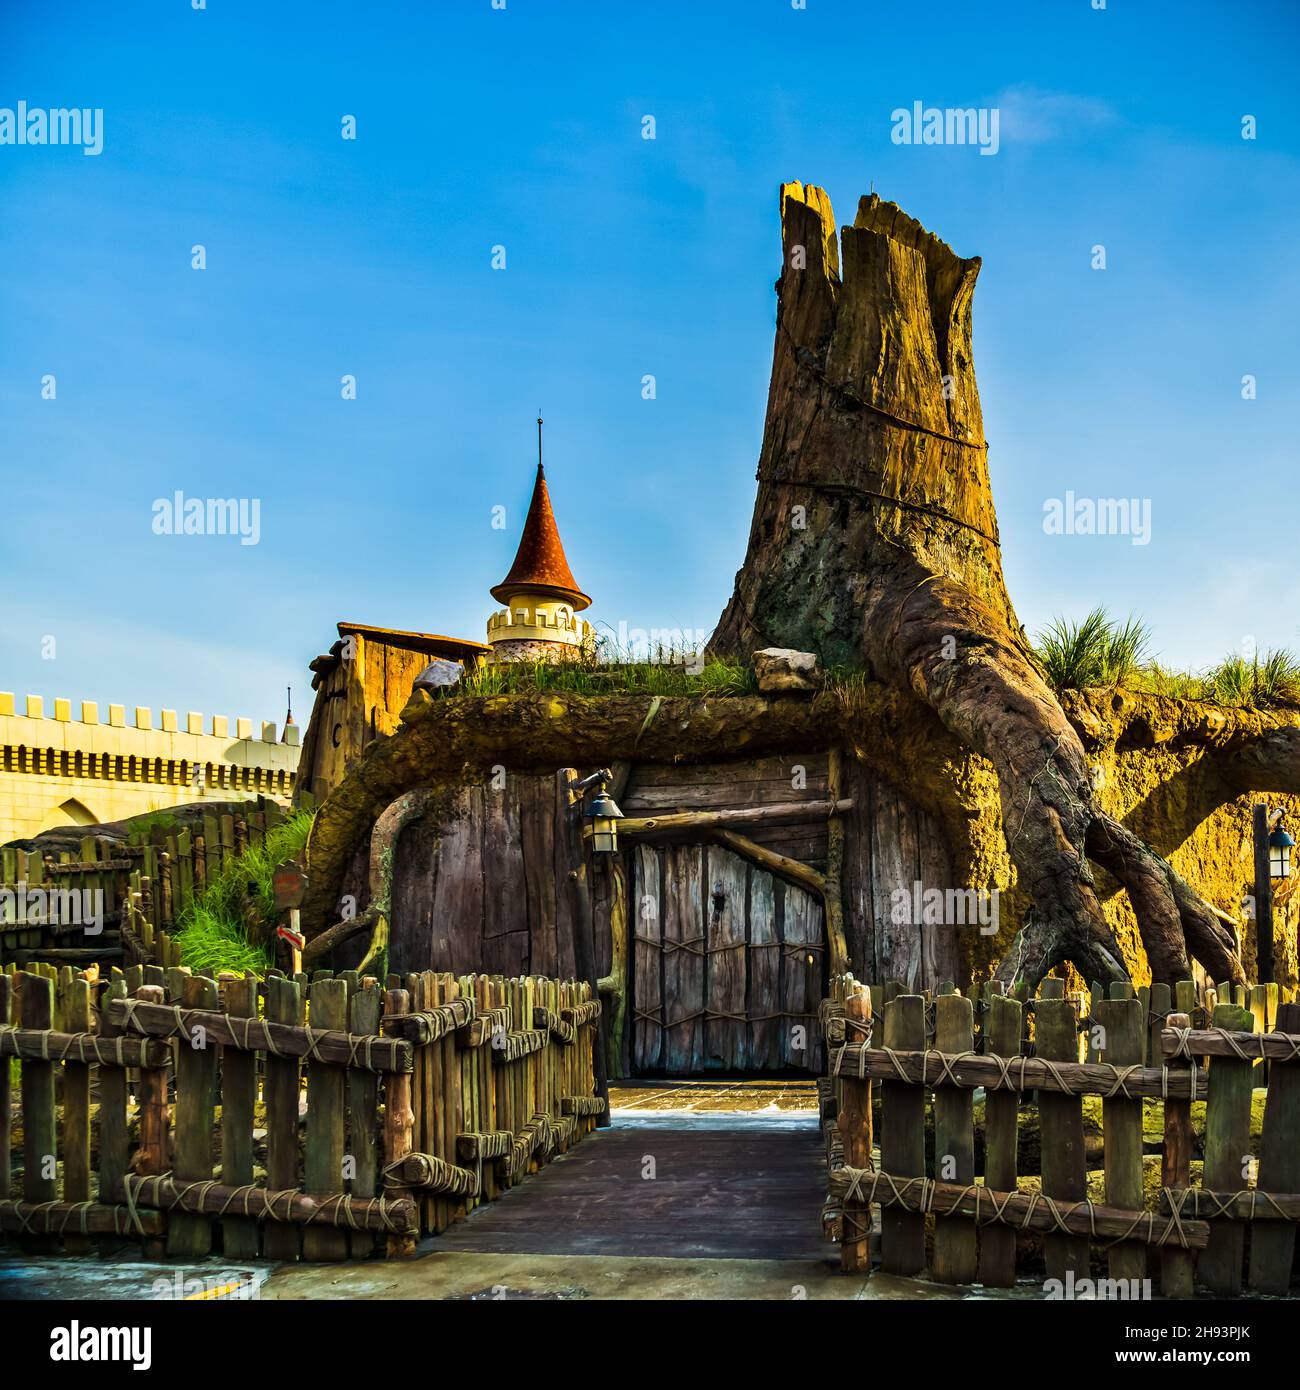 Shrek's Swamp House presso gli Universal Studios Singapore. Foto Stock